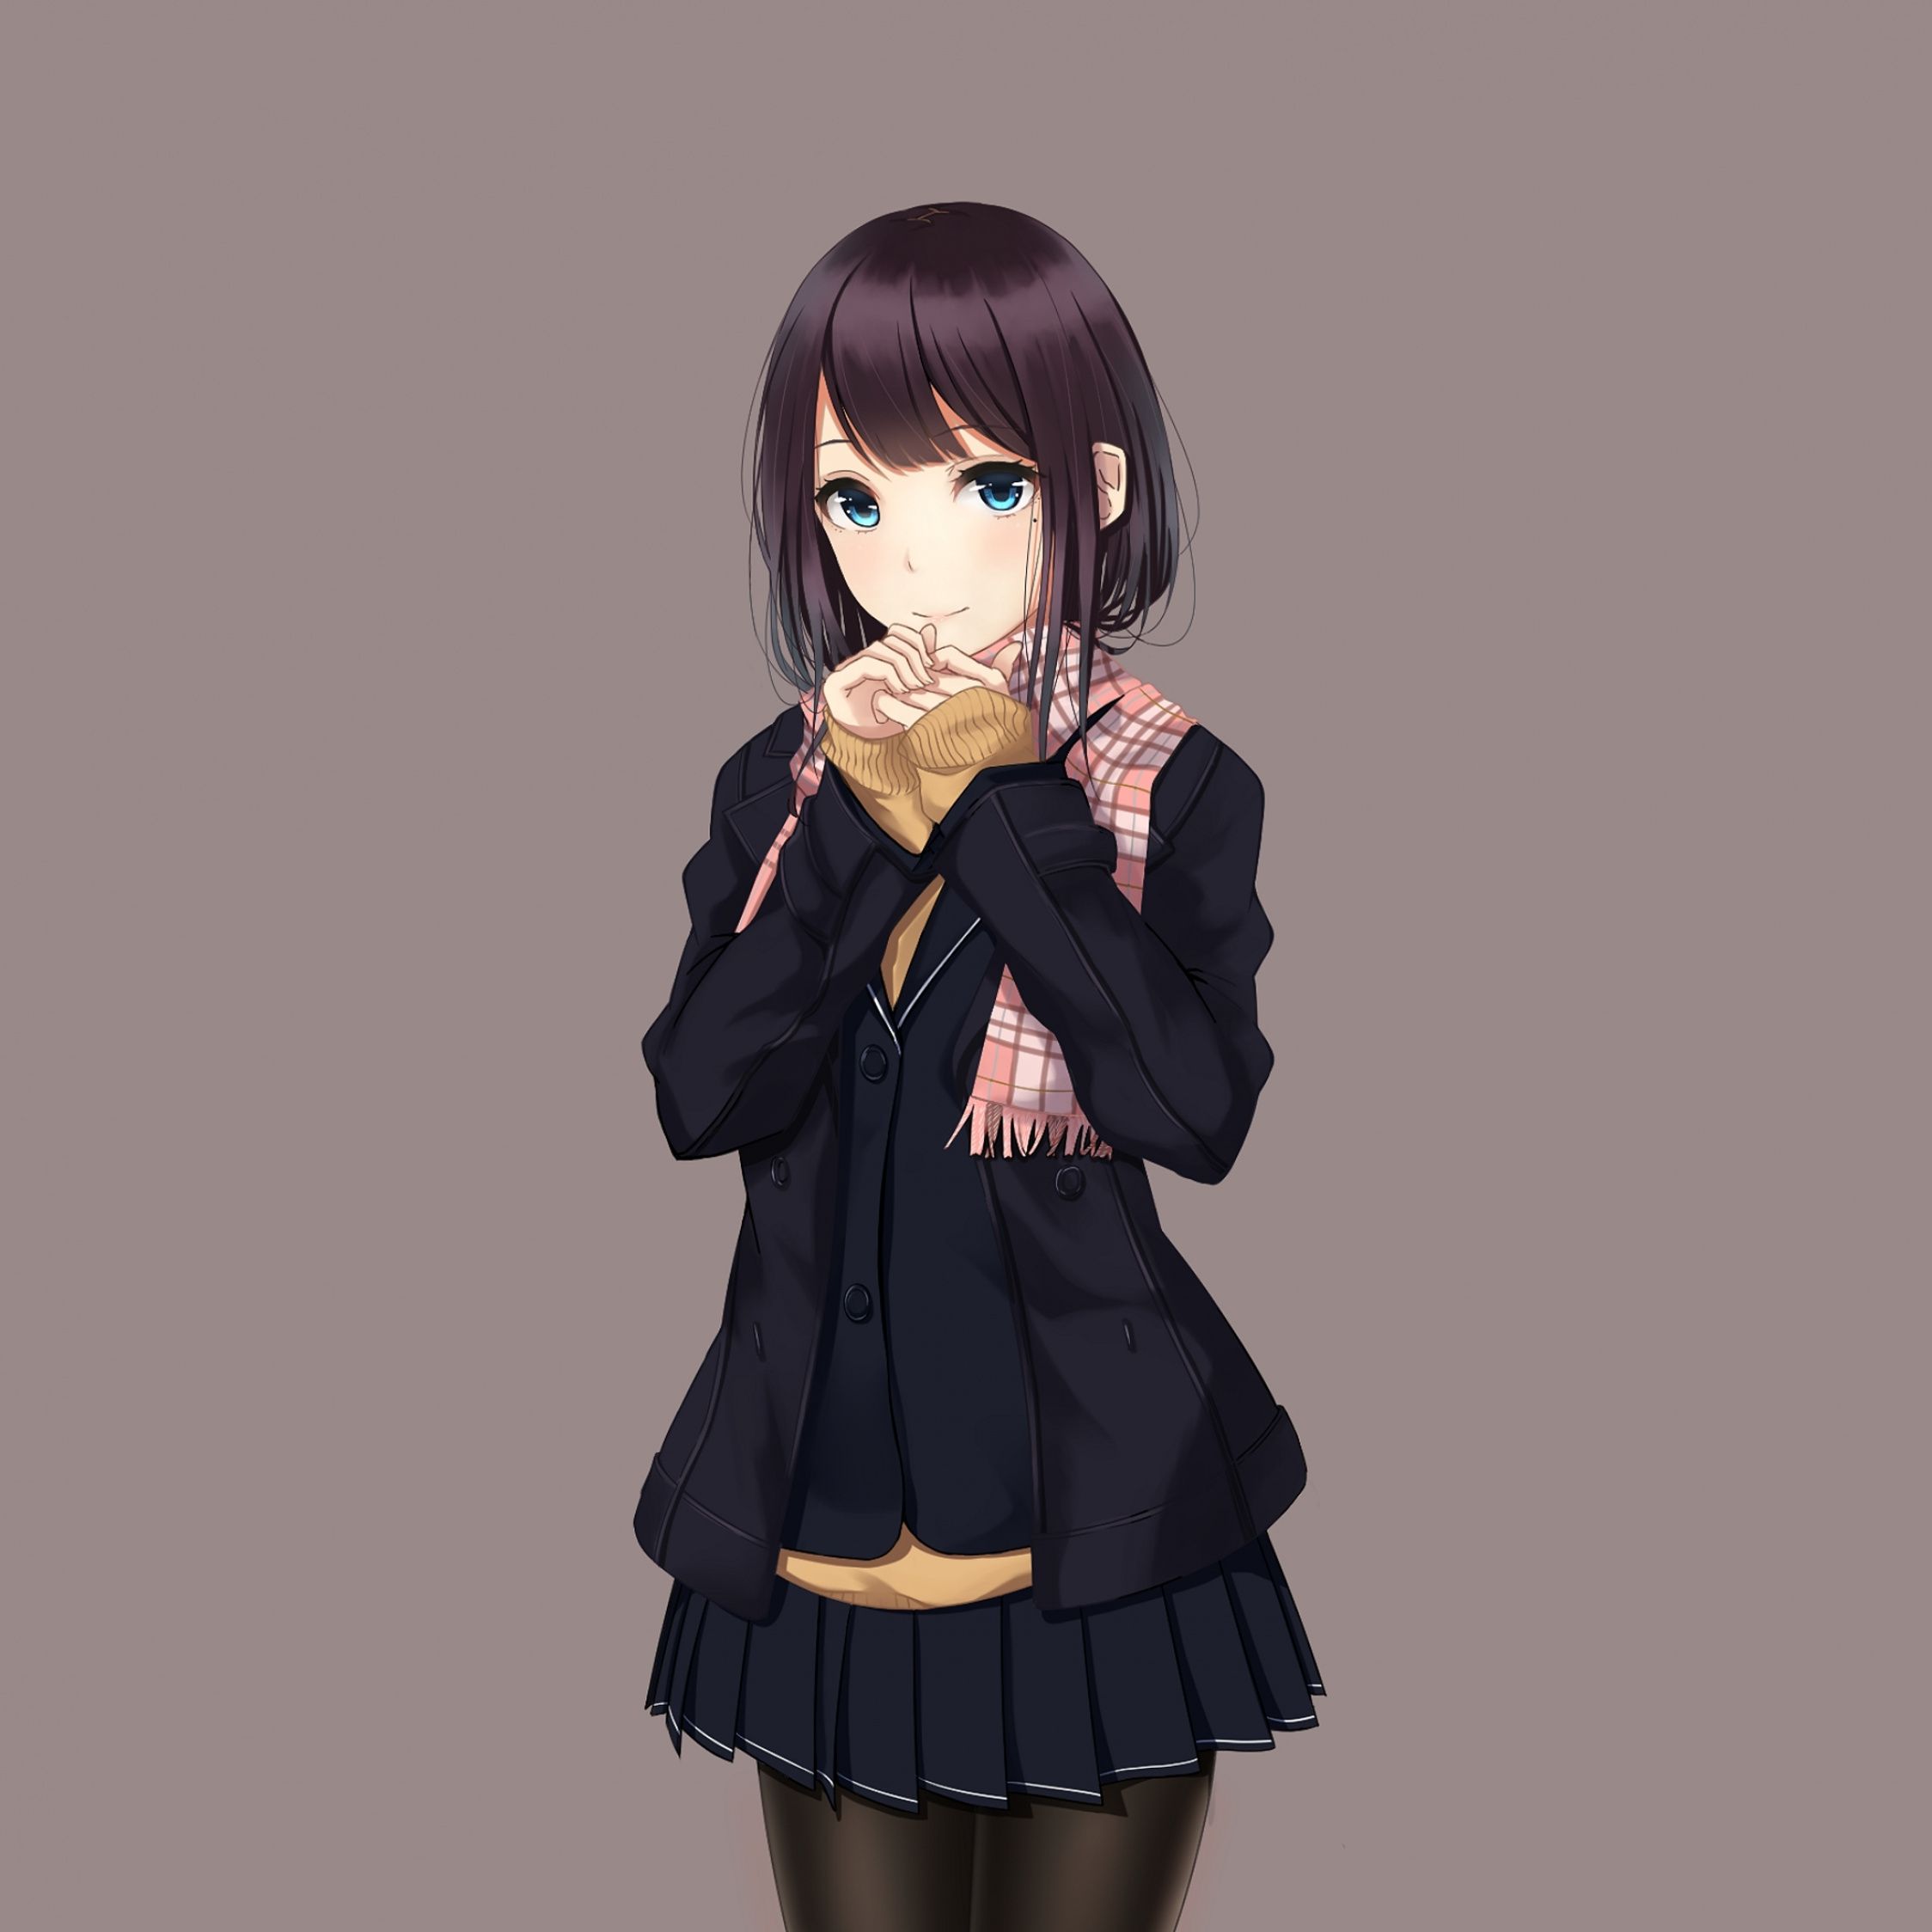 Download School uniform, cute, anime girl wallpaper, 2248x2248